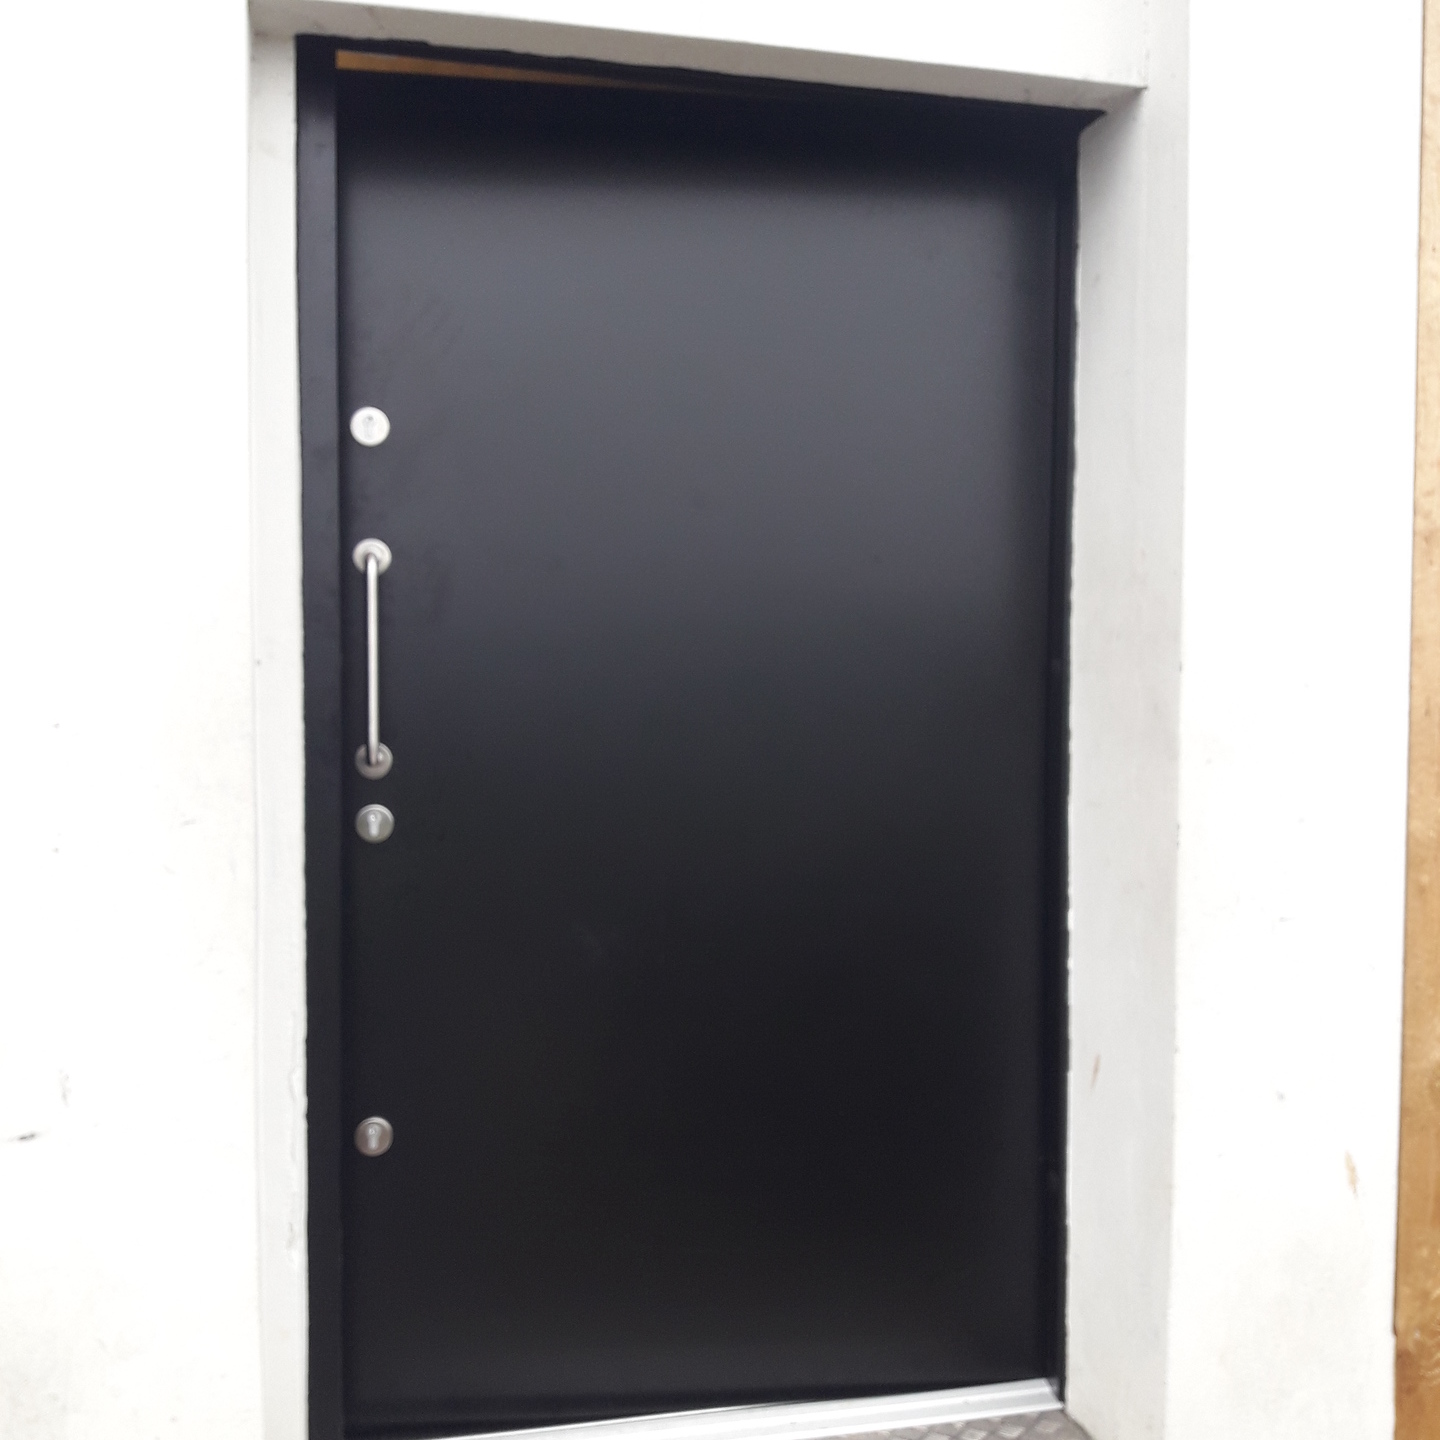 Steel security door in black. Triple Lock system